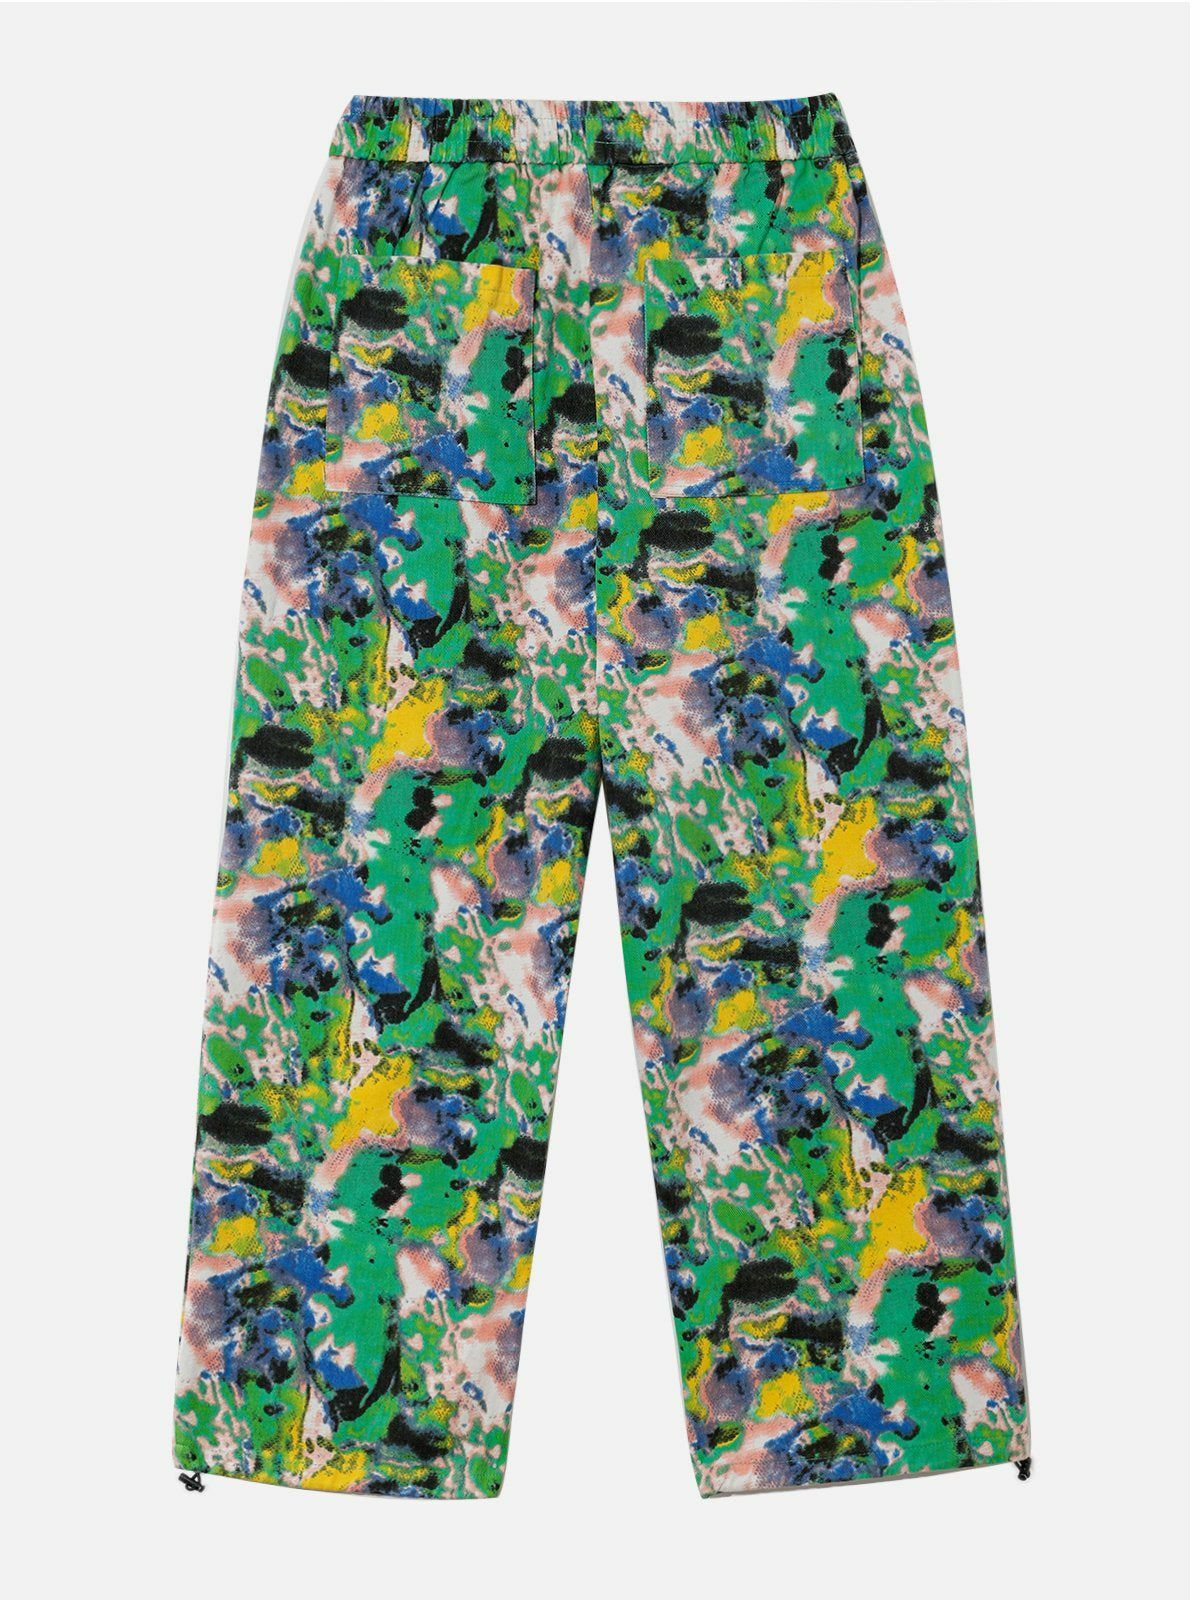 vibrant tiedye graffiti pants edgy streetwear 3295